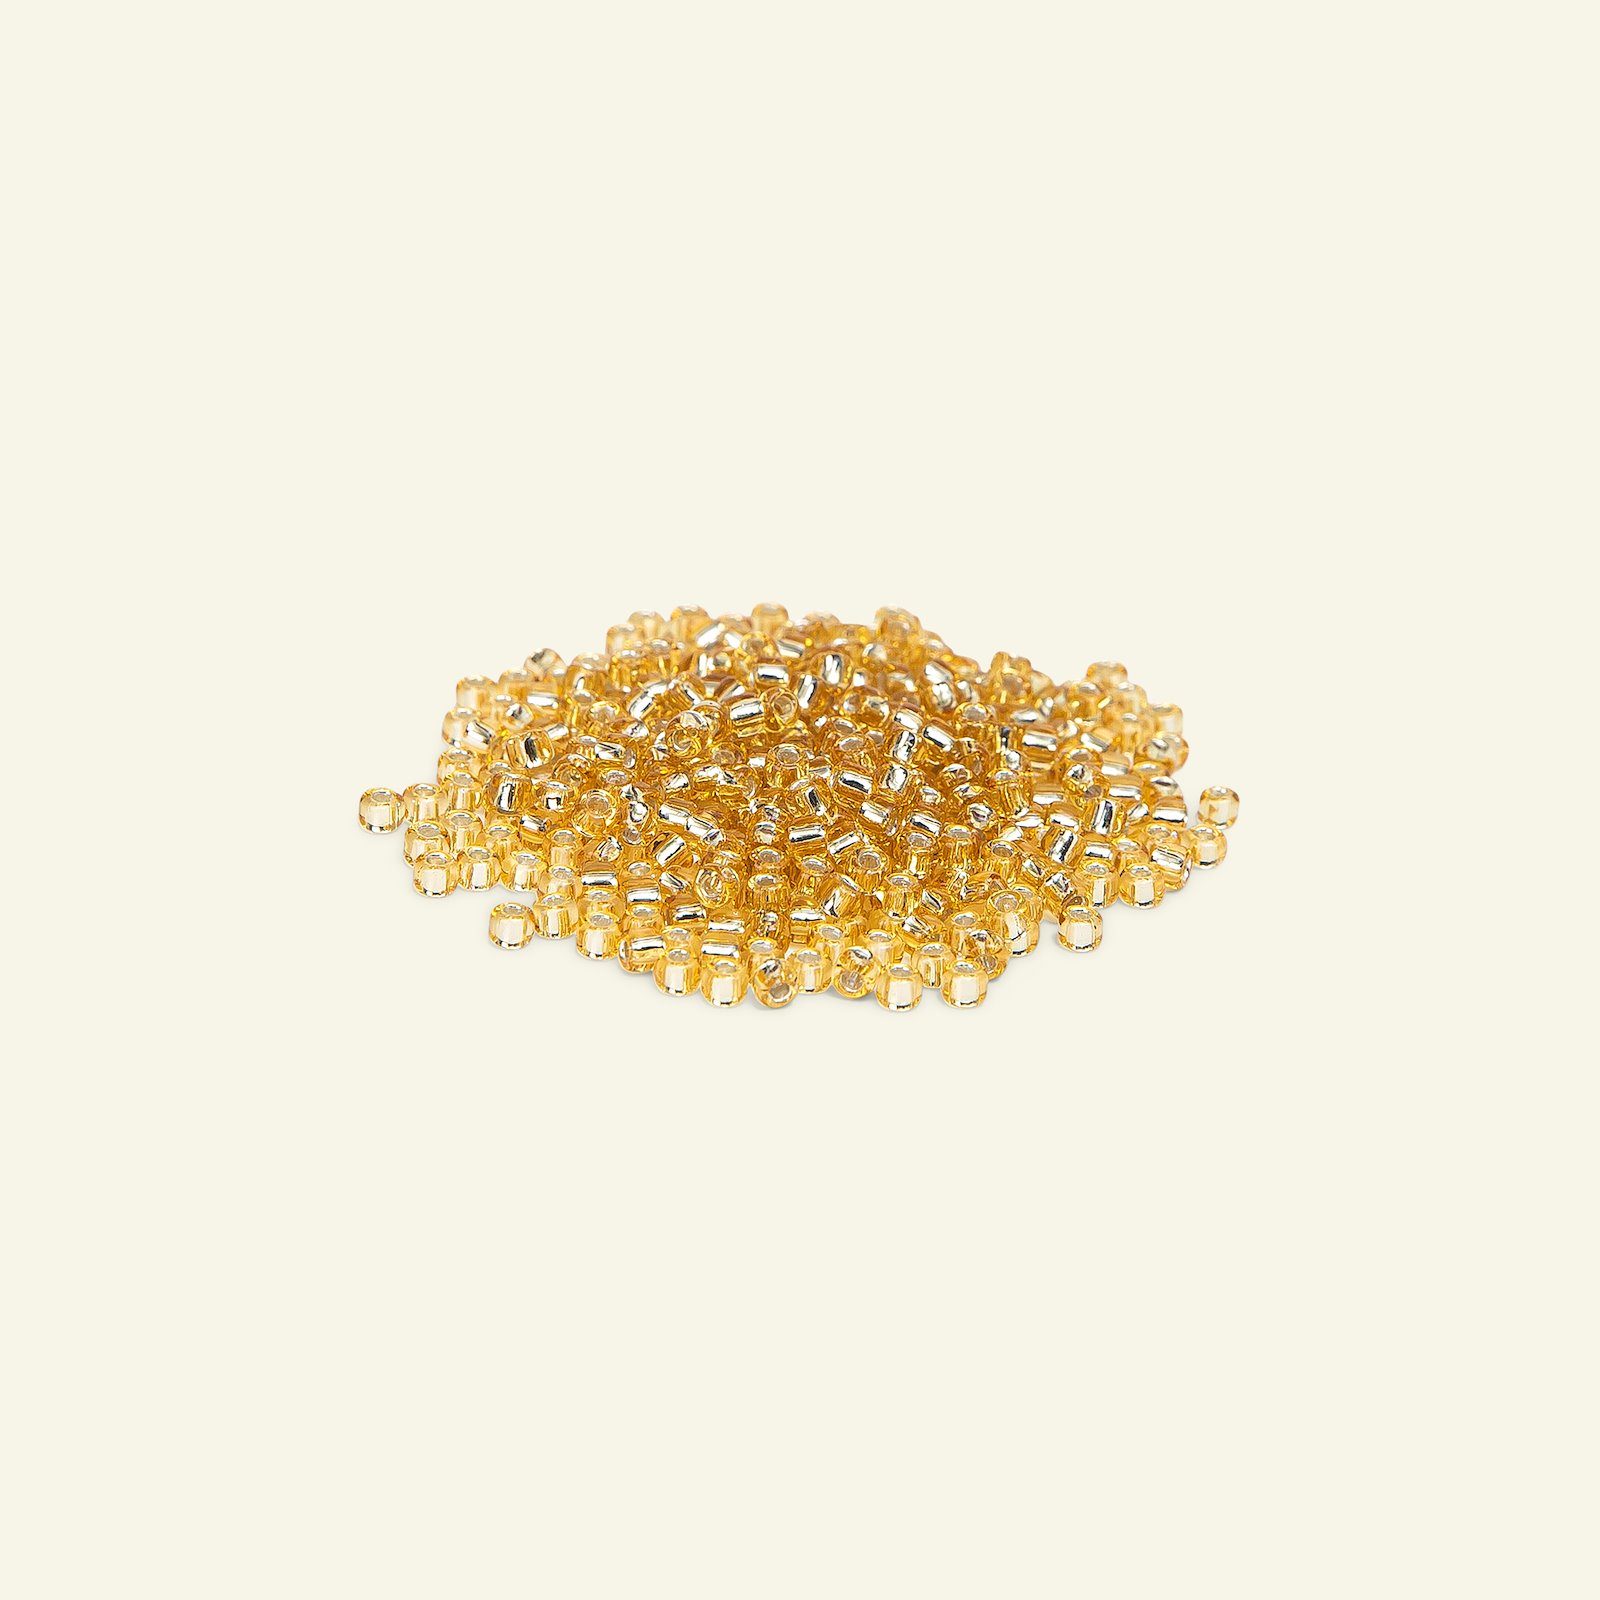 Matsuno glass bead 8/0 gold colored 10g 47134_pack_b